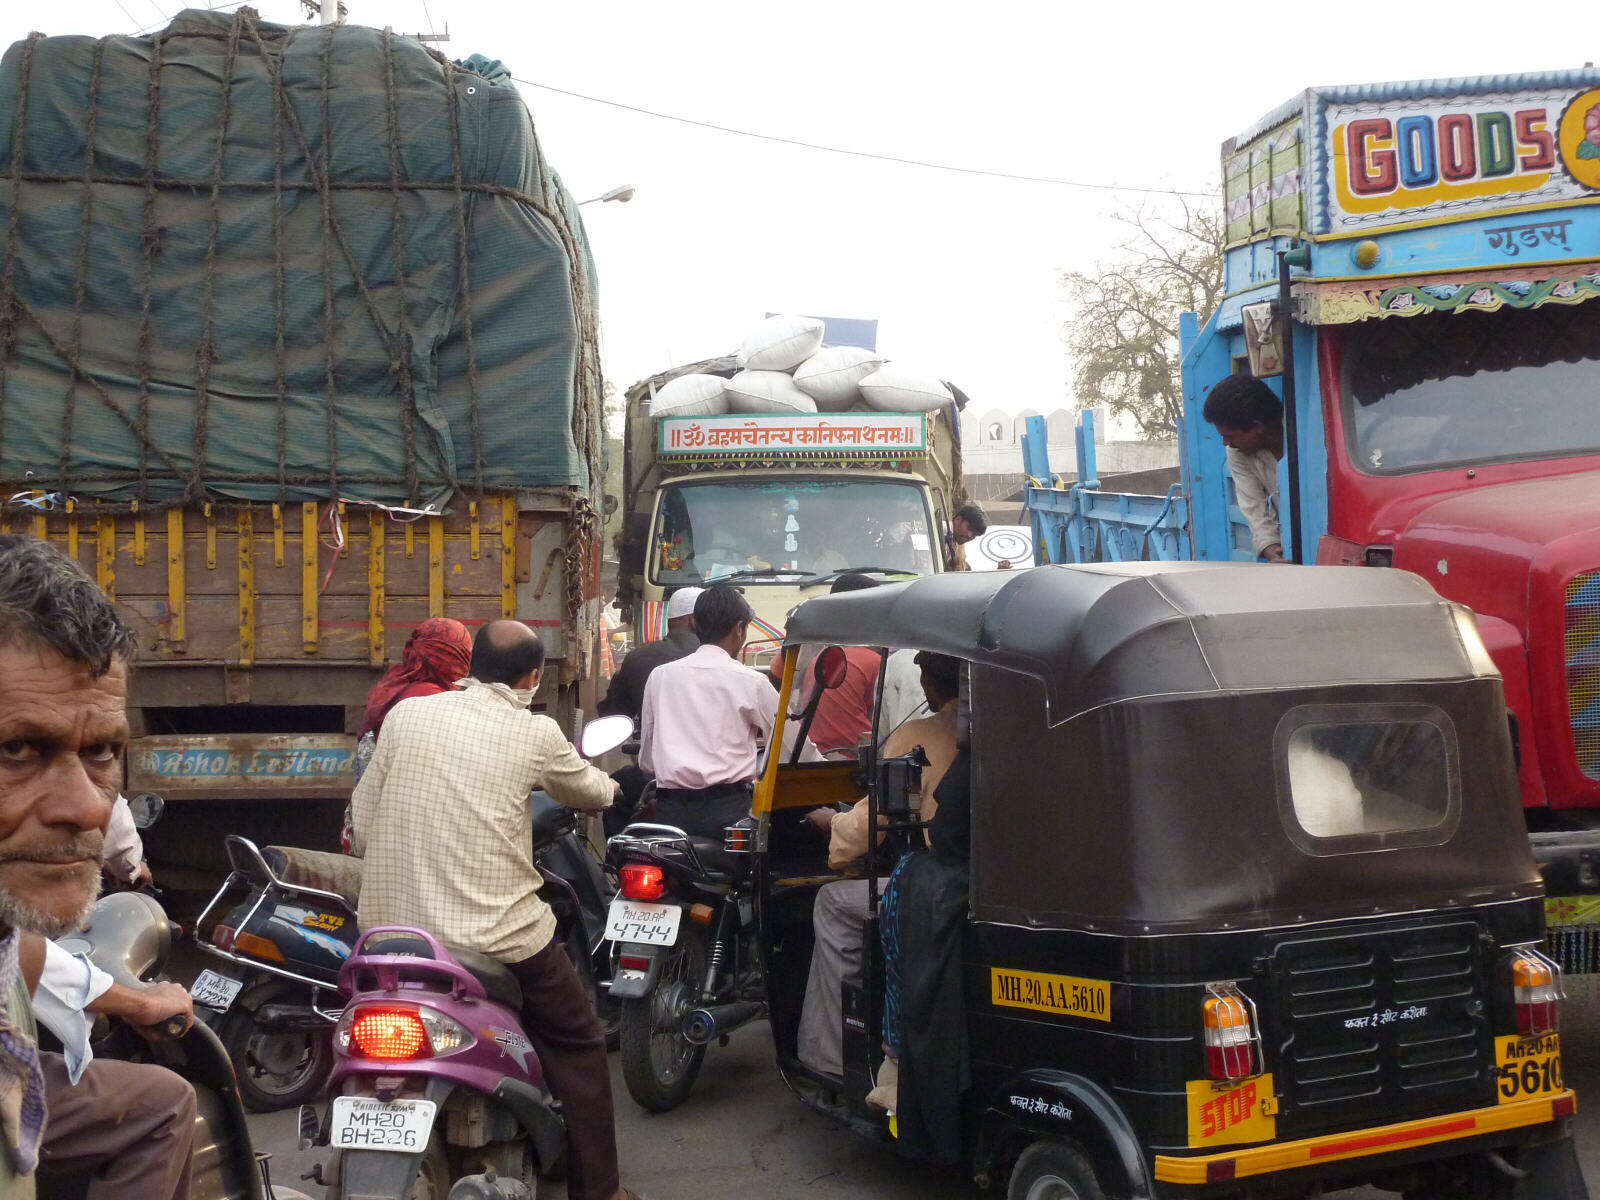 An impenetrable traffic jam in Aurangabad, India